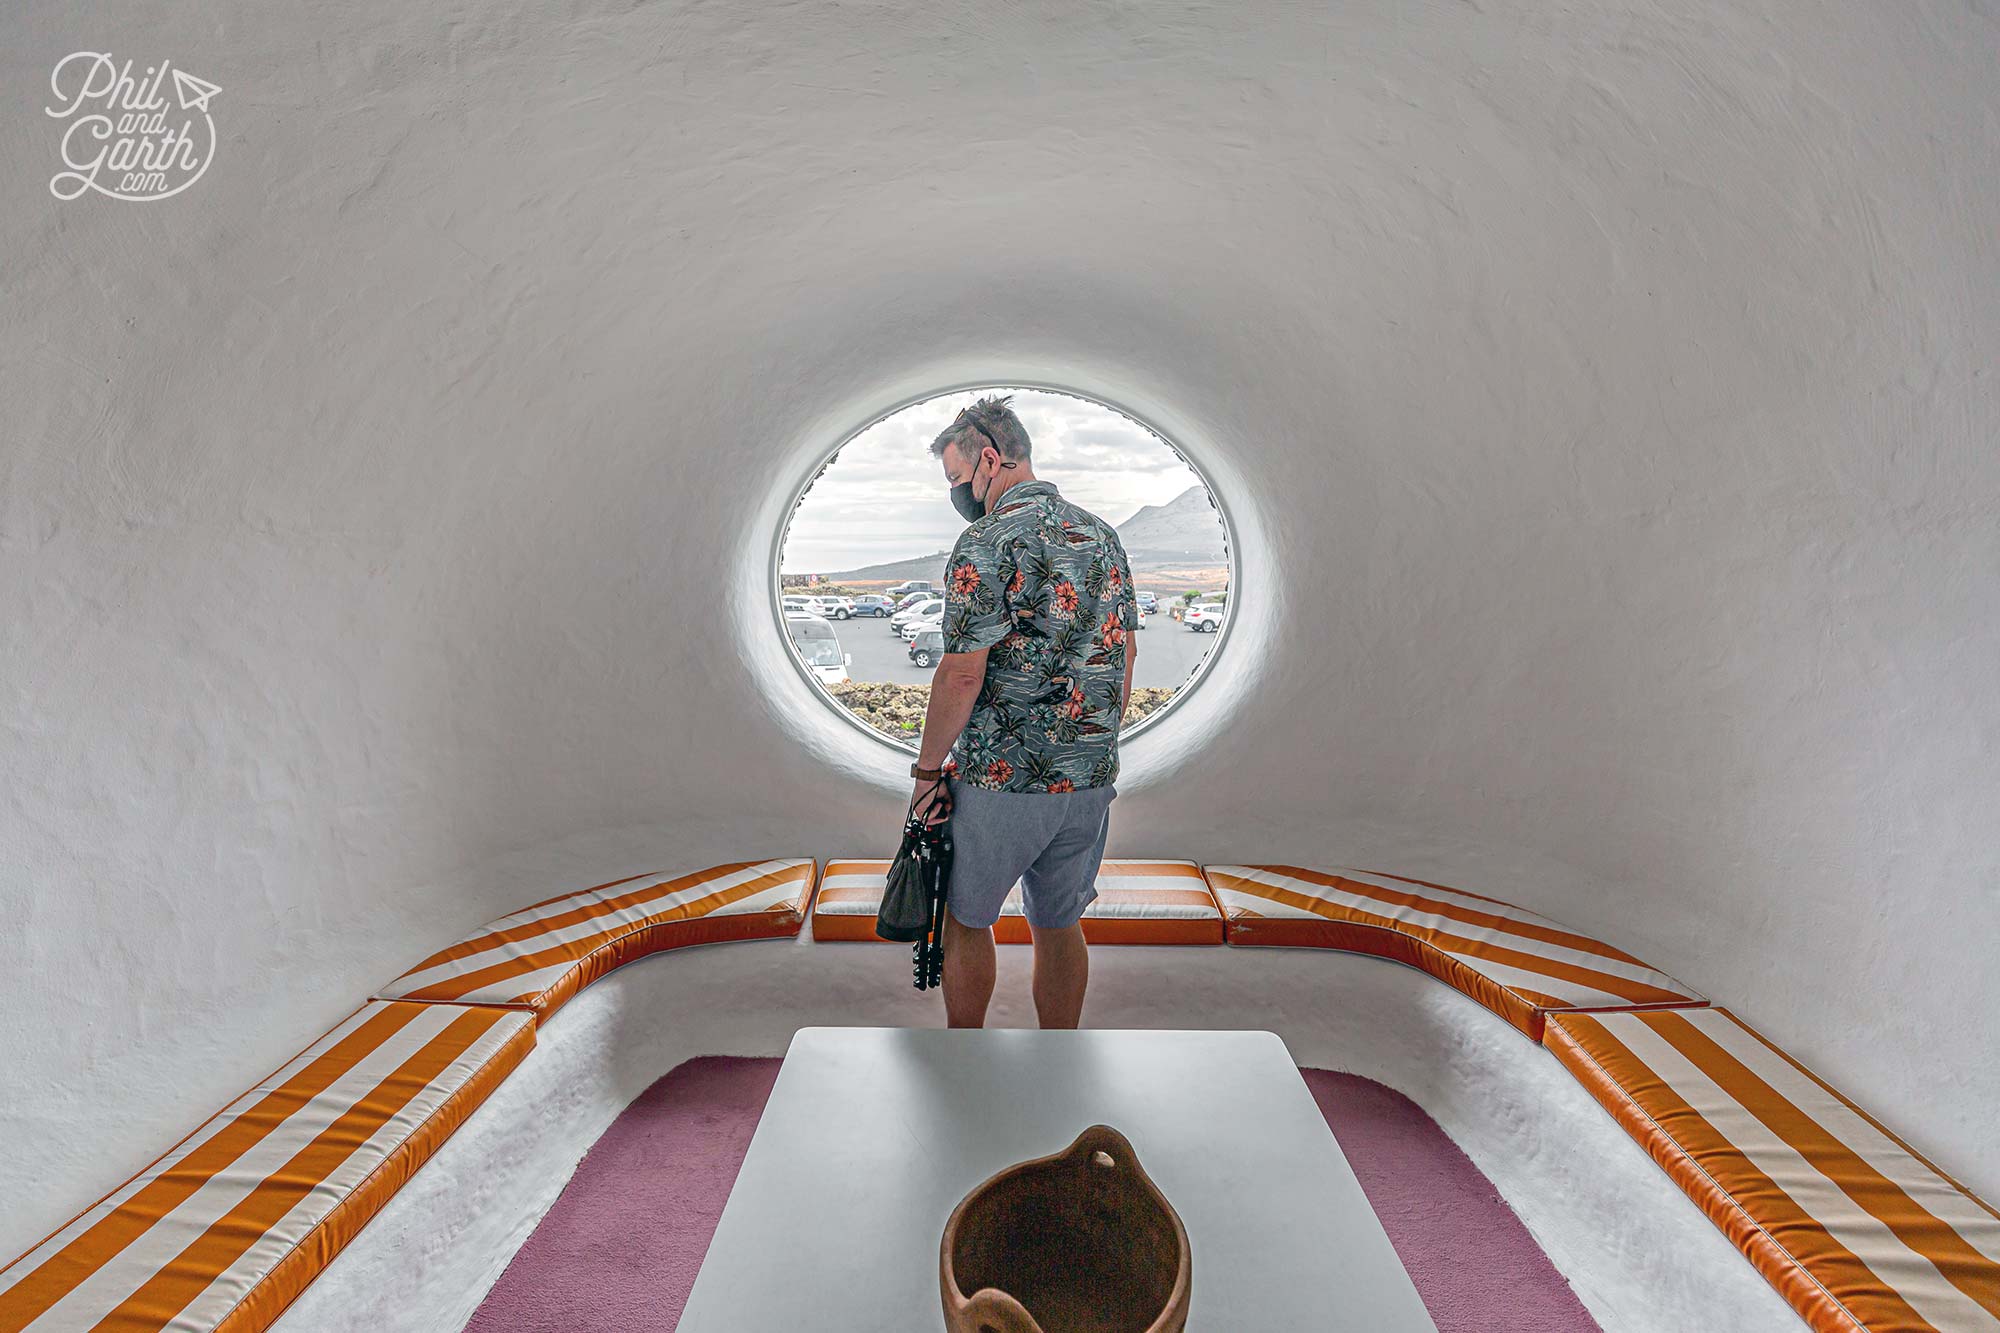 Phil checking out another cool interior space Mirador del Rio Lanzarote Spain